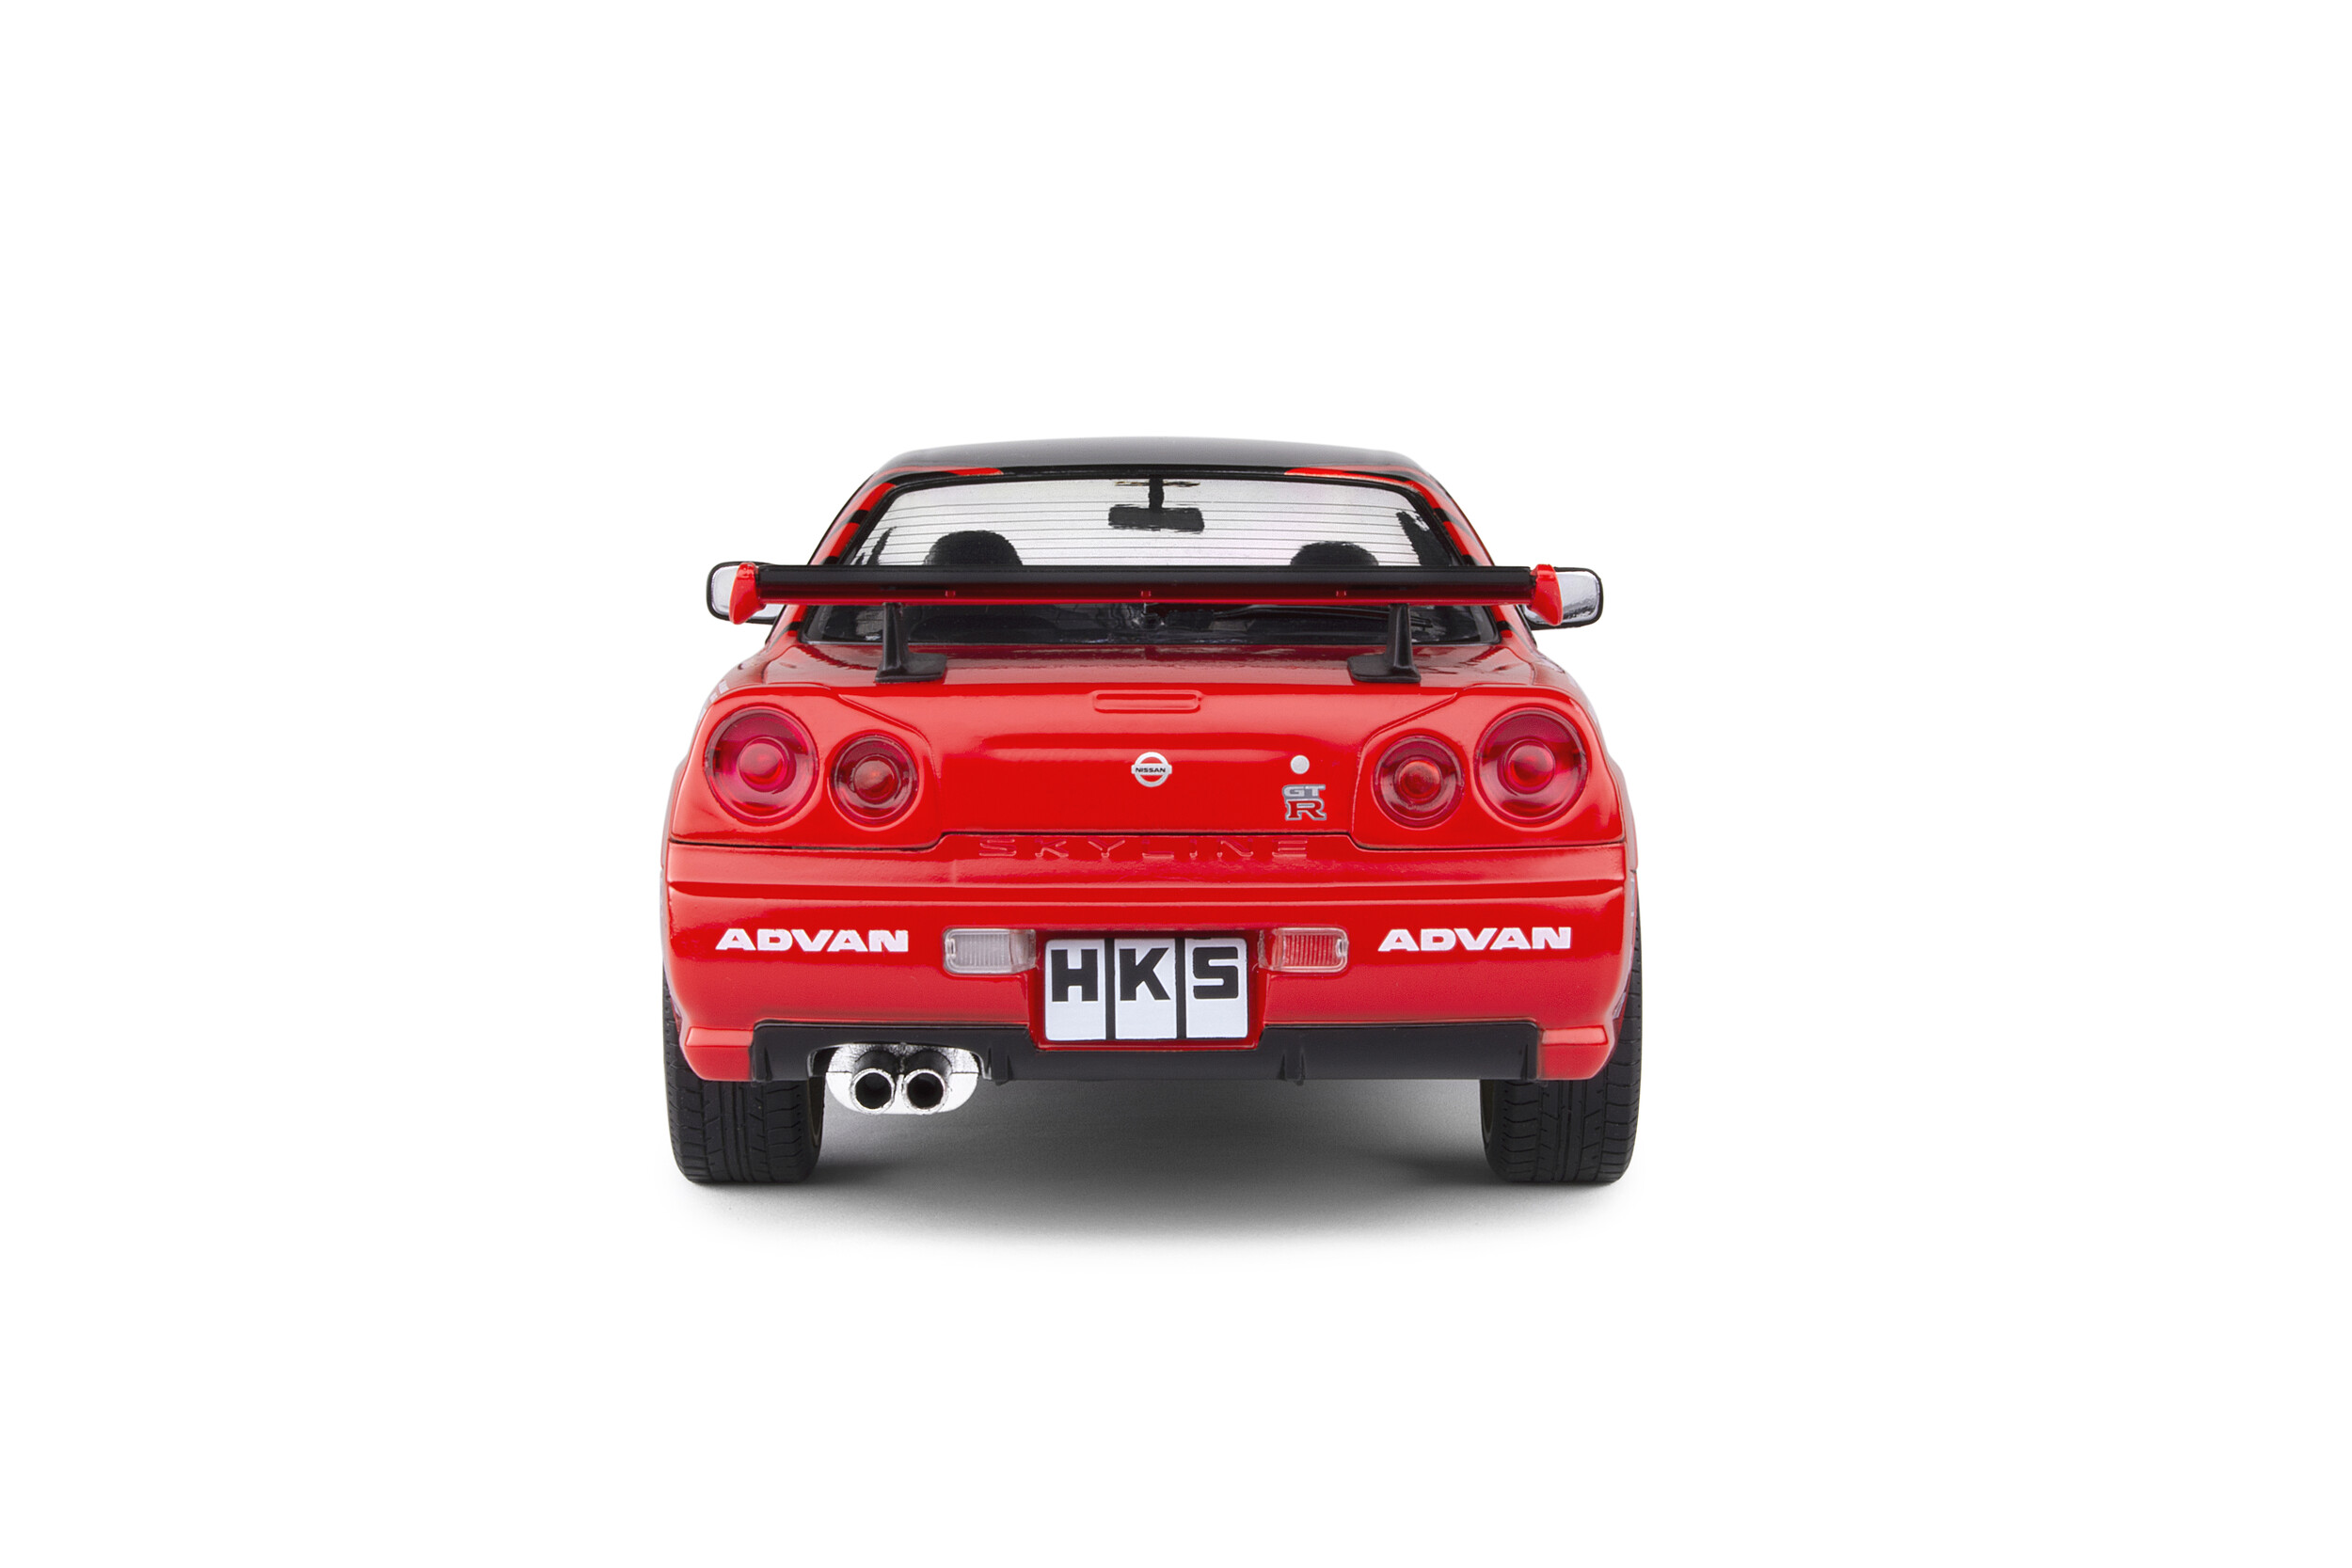 Solido S1804302 Nissan Skyline Gt-r R34 ADVAN Drift 1999 1/18 Black Red for sale online